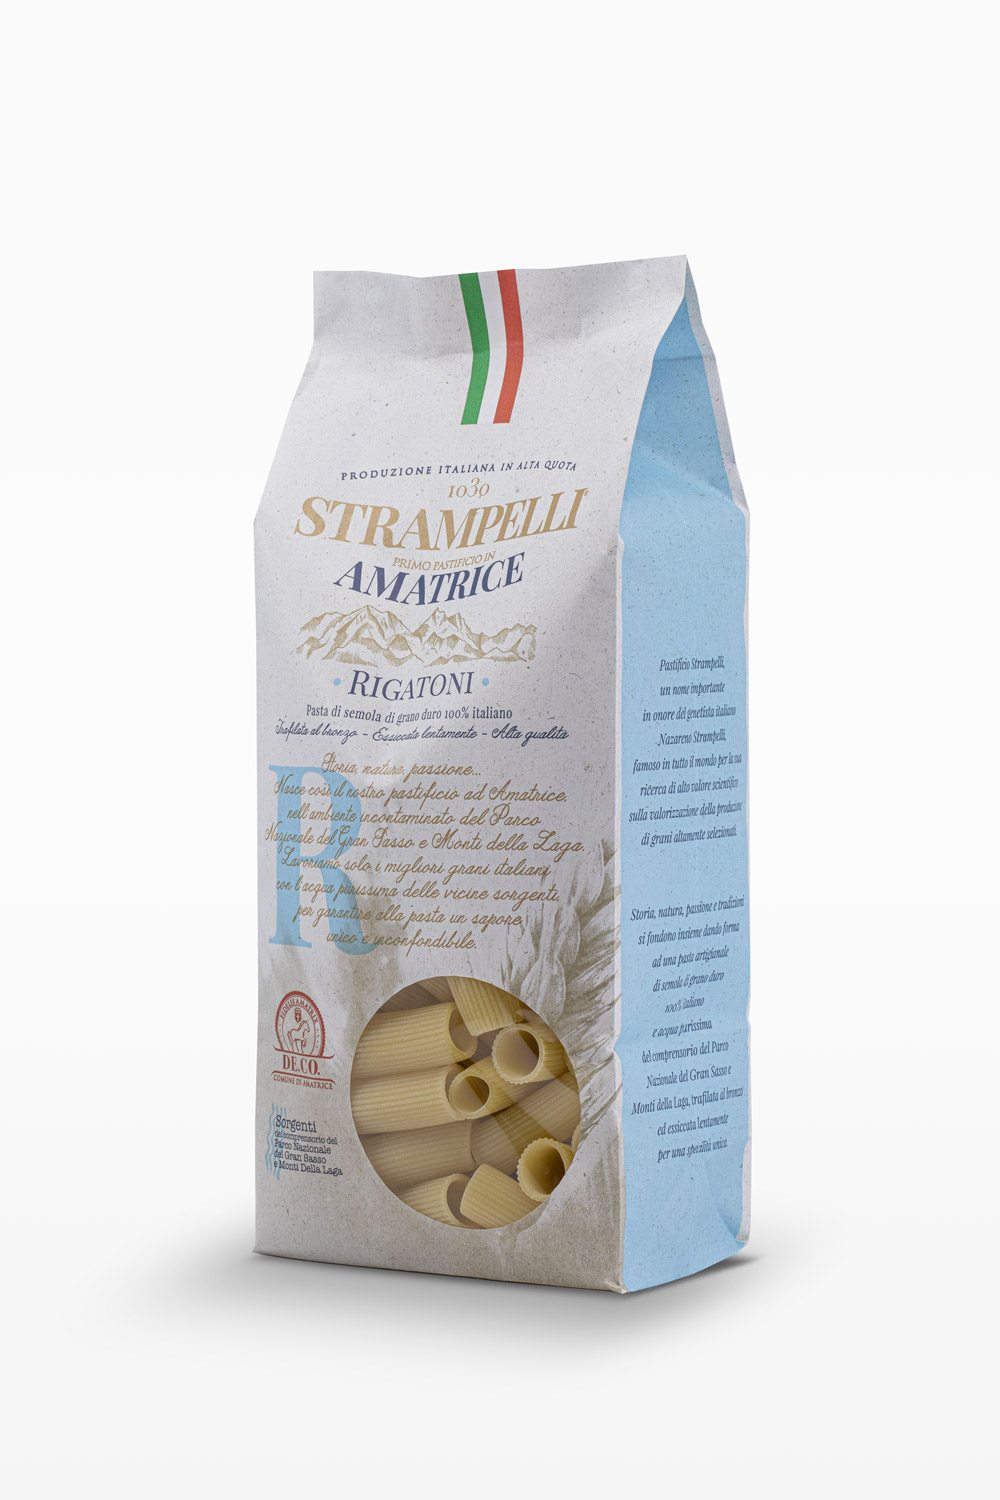 Rigatoni - Durum wheat semolina pasta, rough and porous, 100% Italian wheat, slow drying at low temperature.